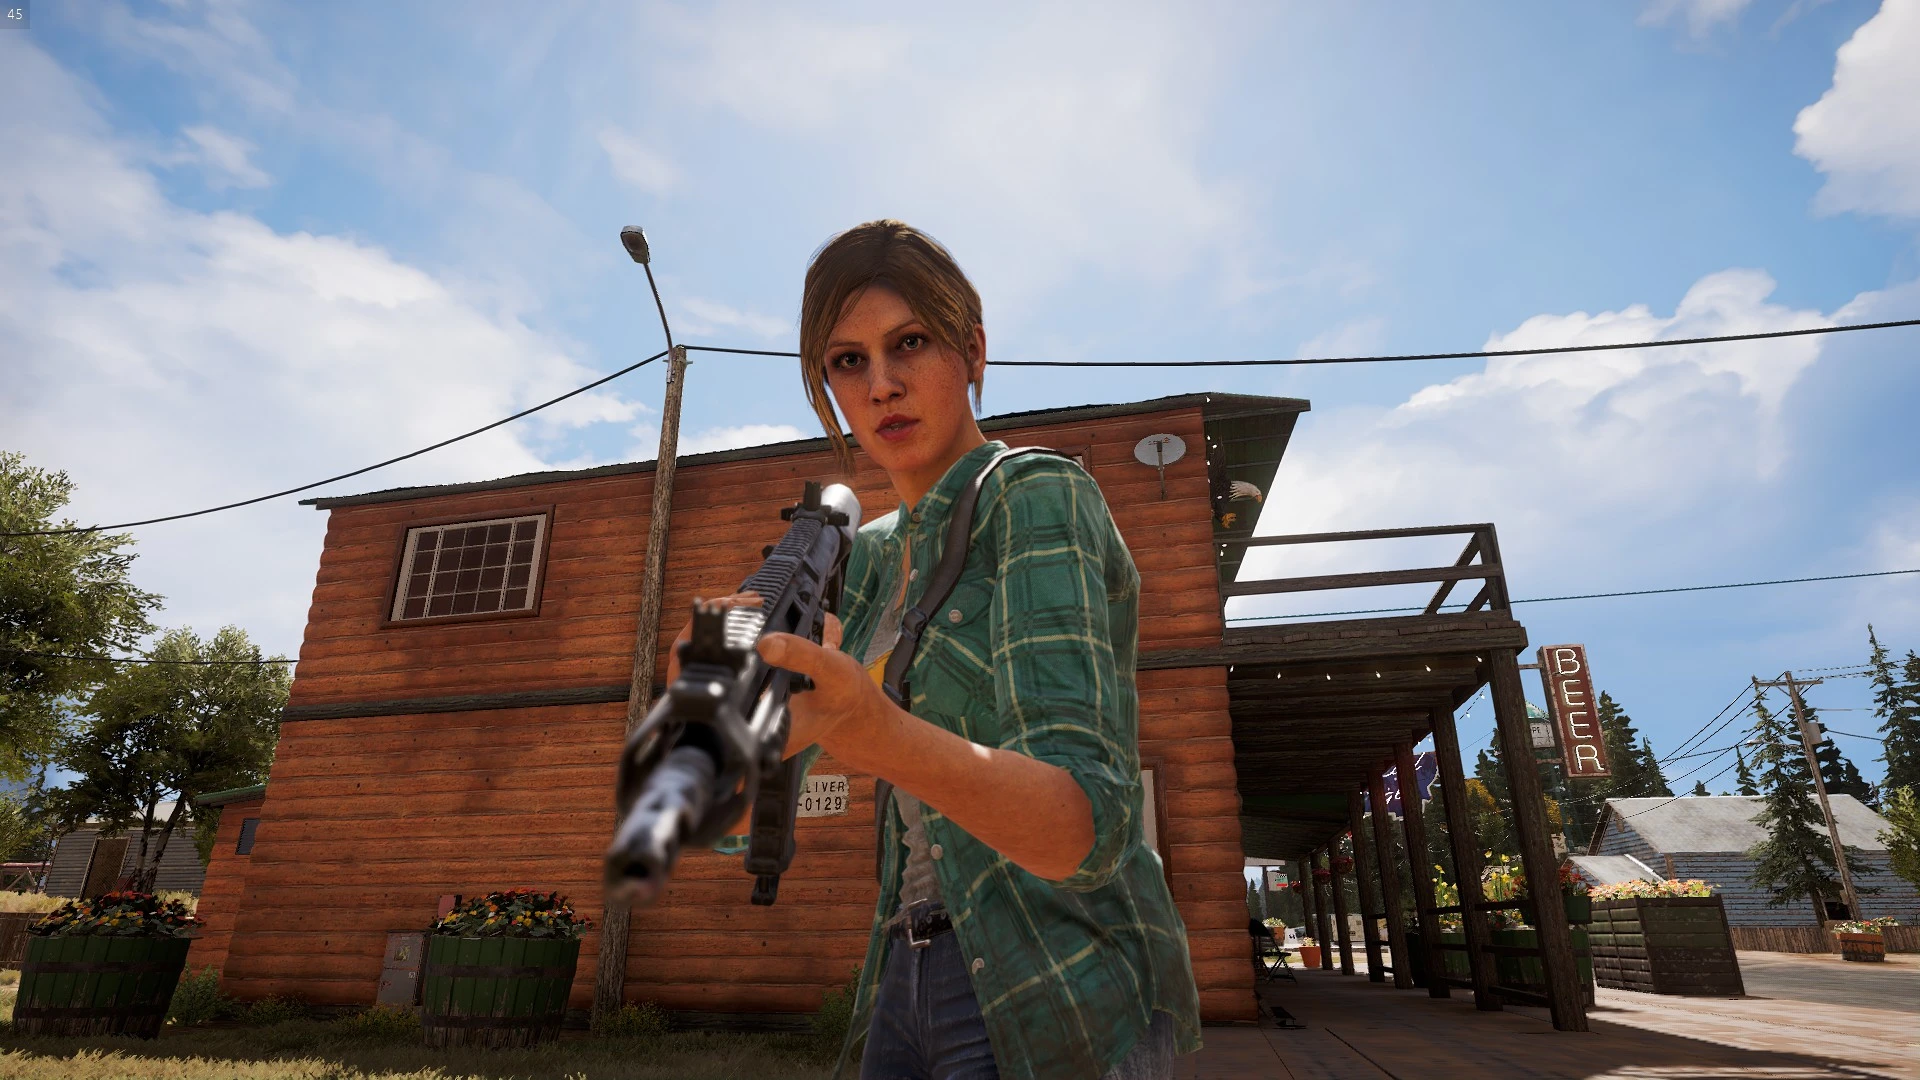 Far Cry 5 Nexus - Mods and Community